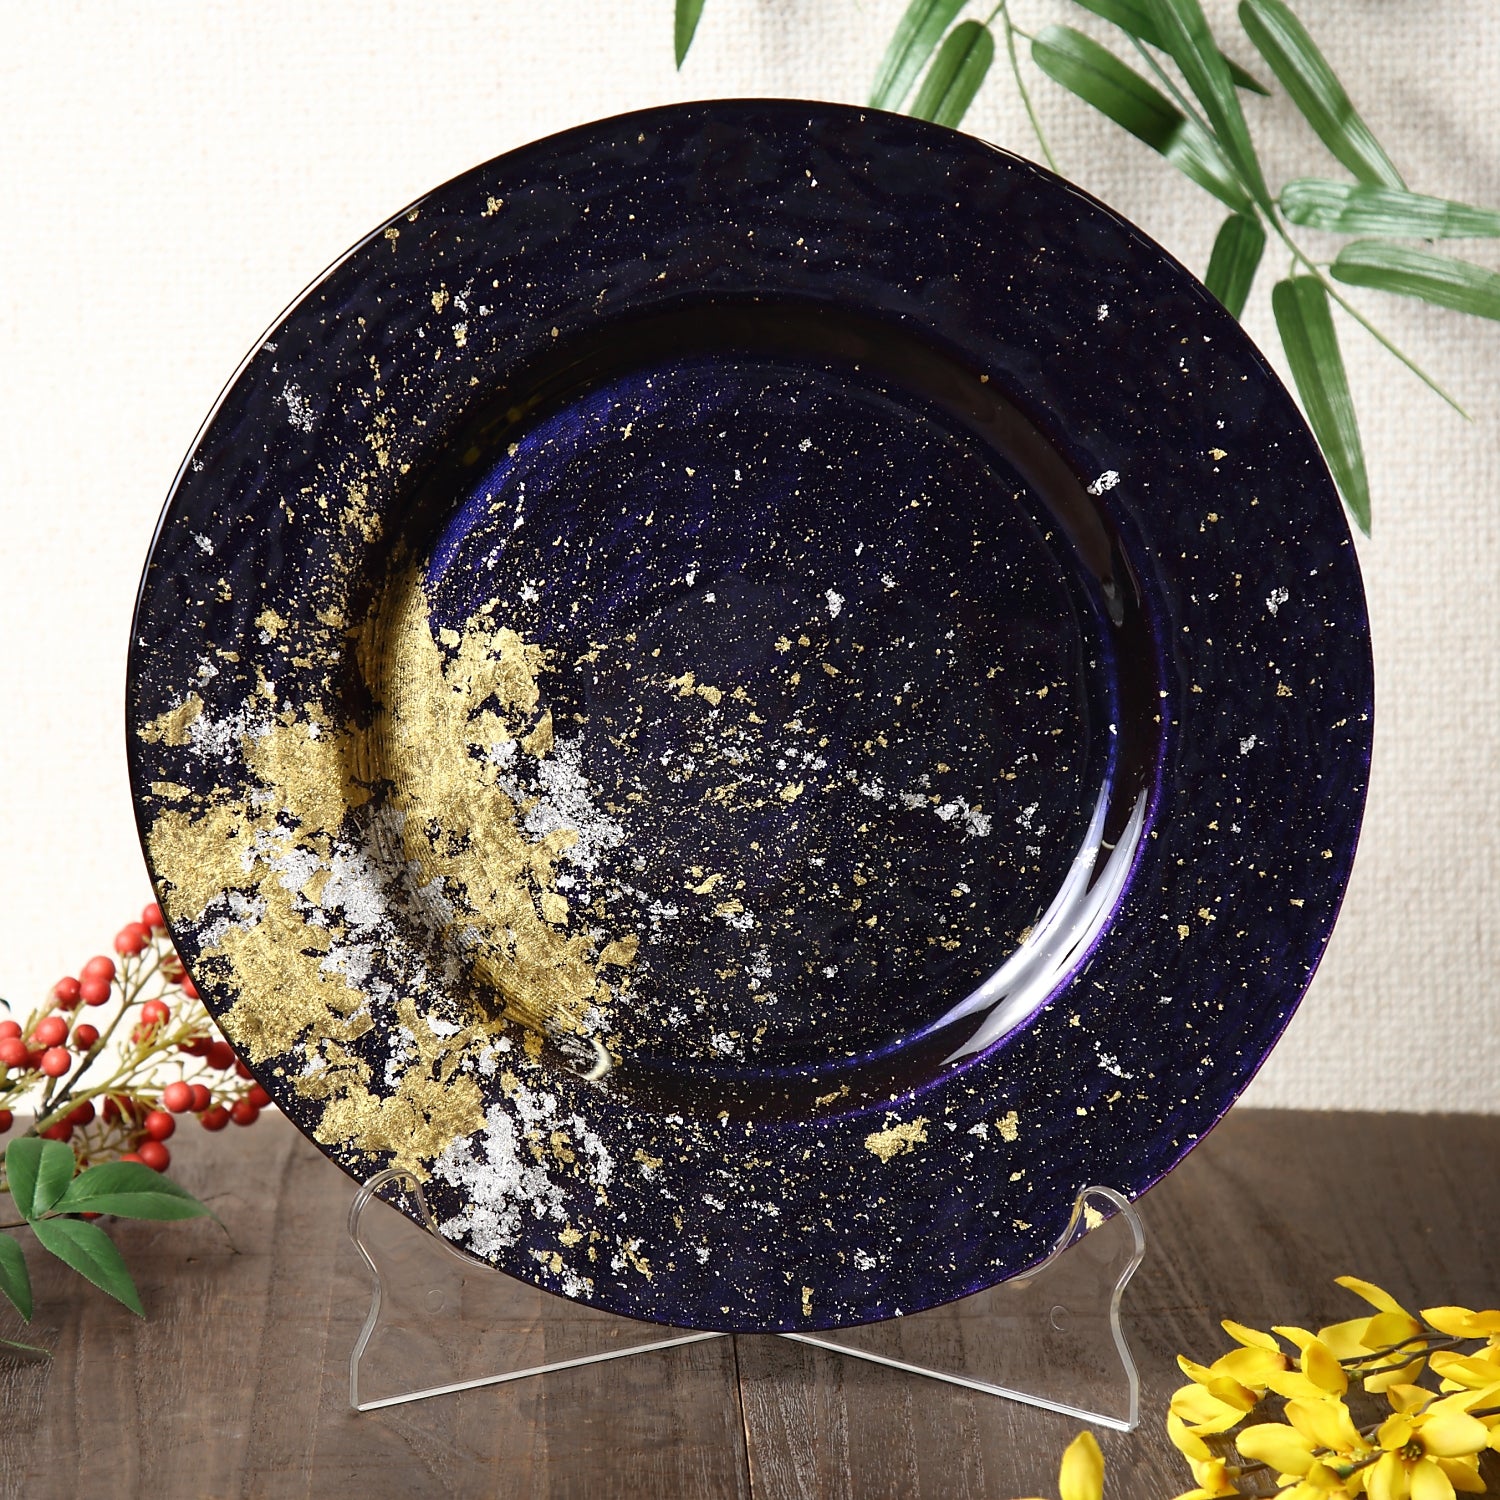 Syosaku Japanese Urushi Glass Dinner Plate 12.5-inch (32cm) Majestic Blue with Gold Leaf, Dishwasher Safe